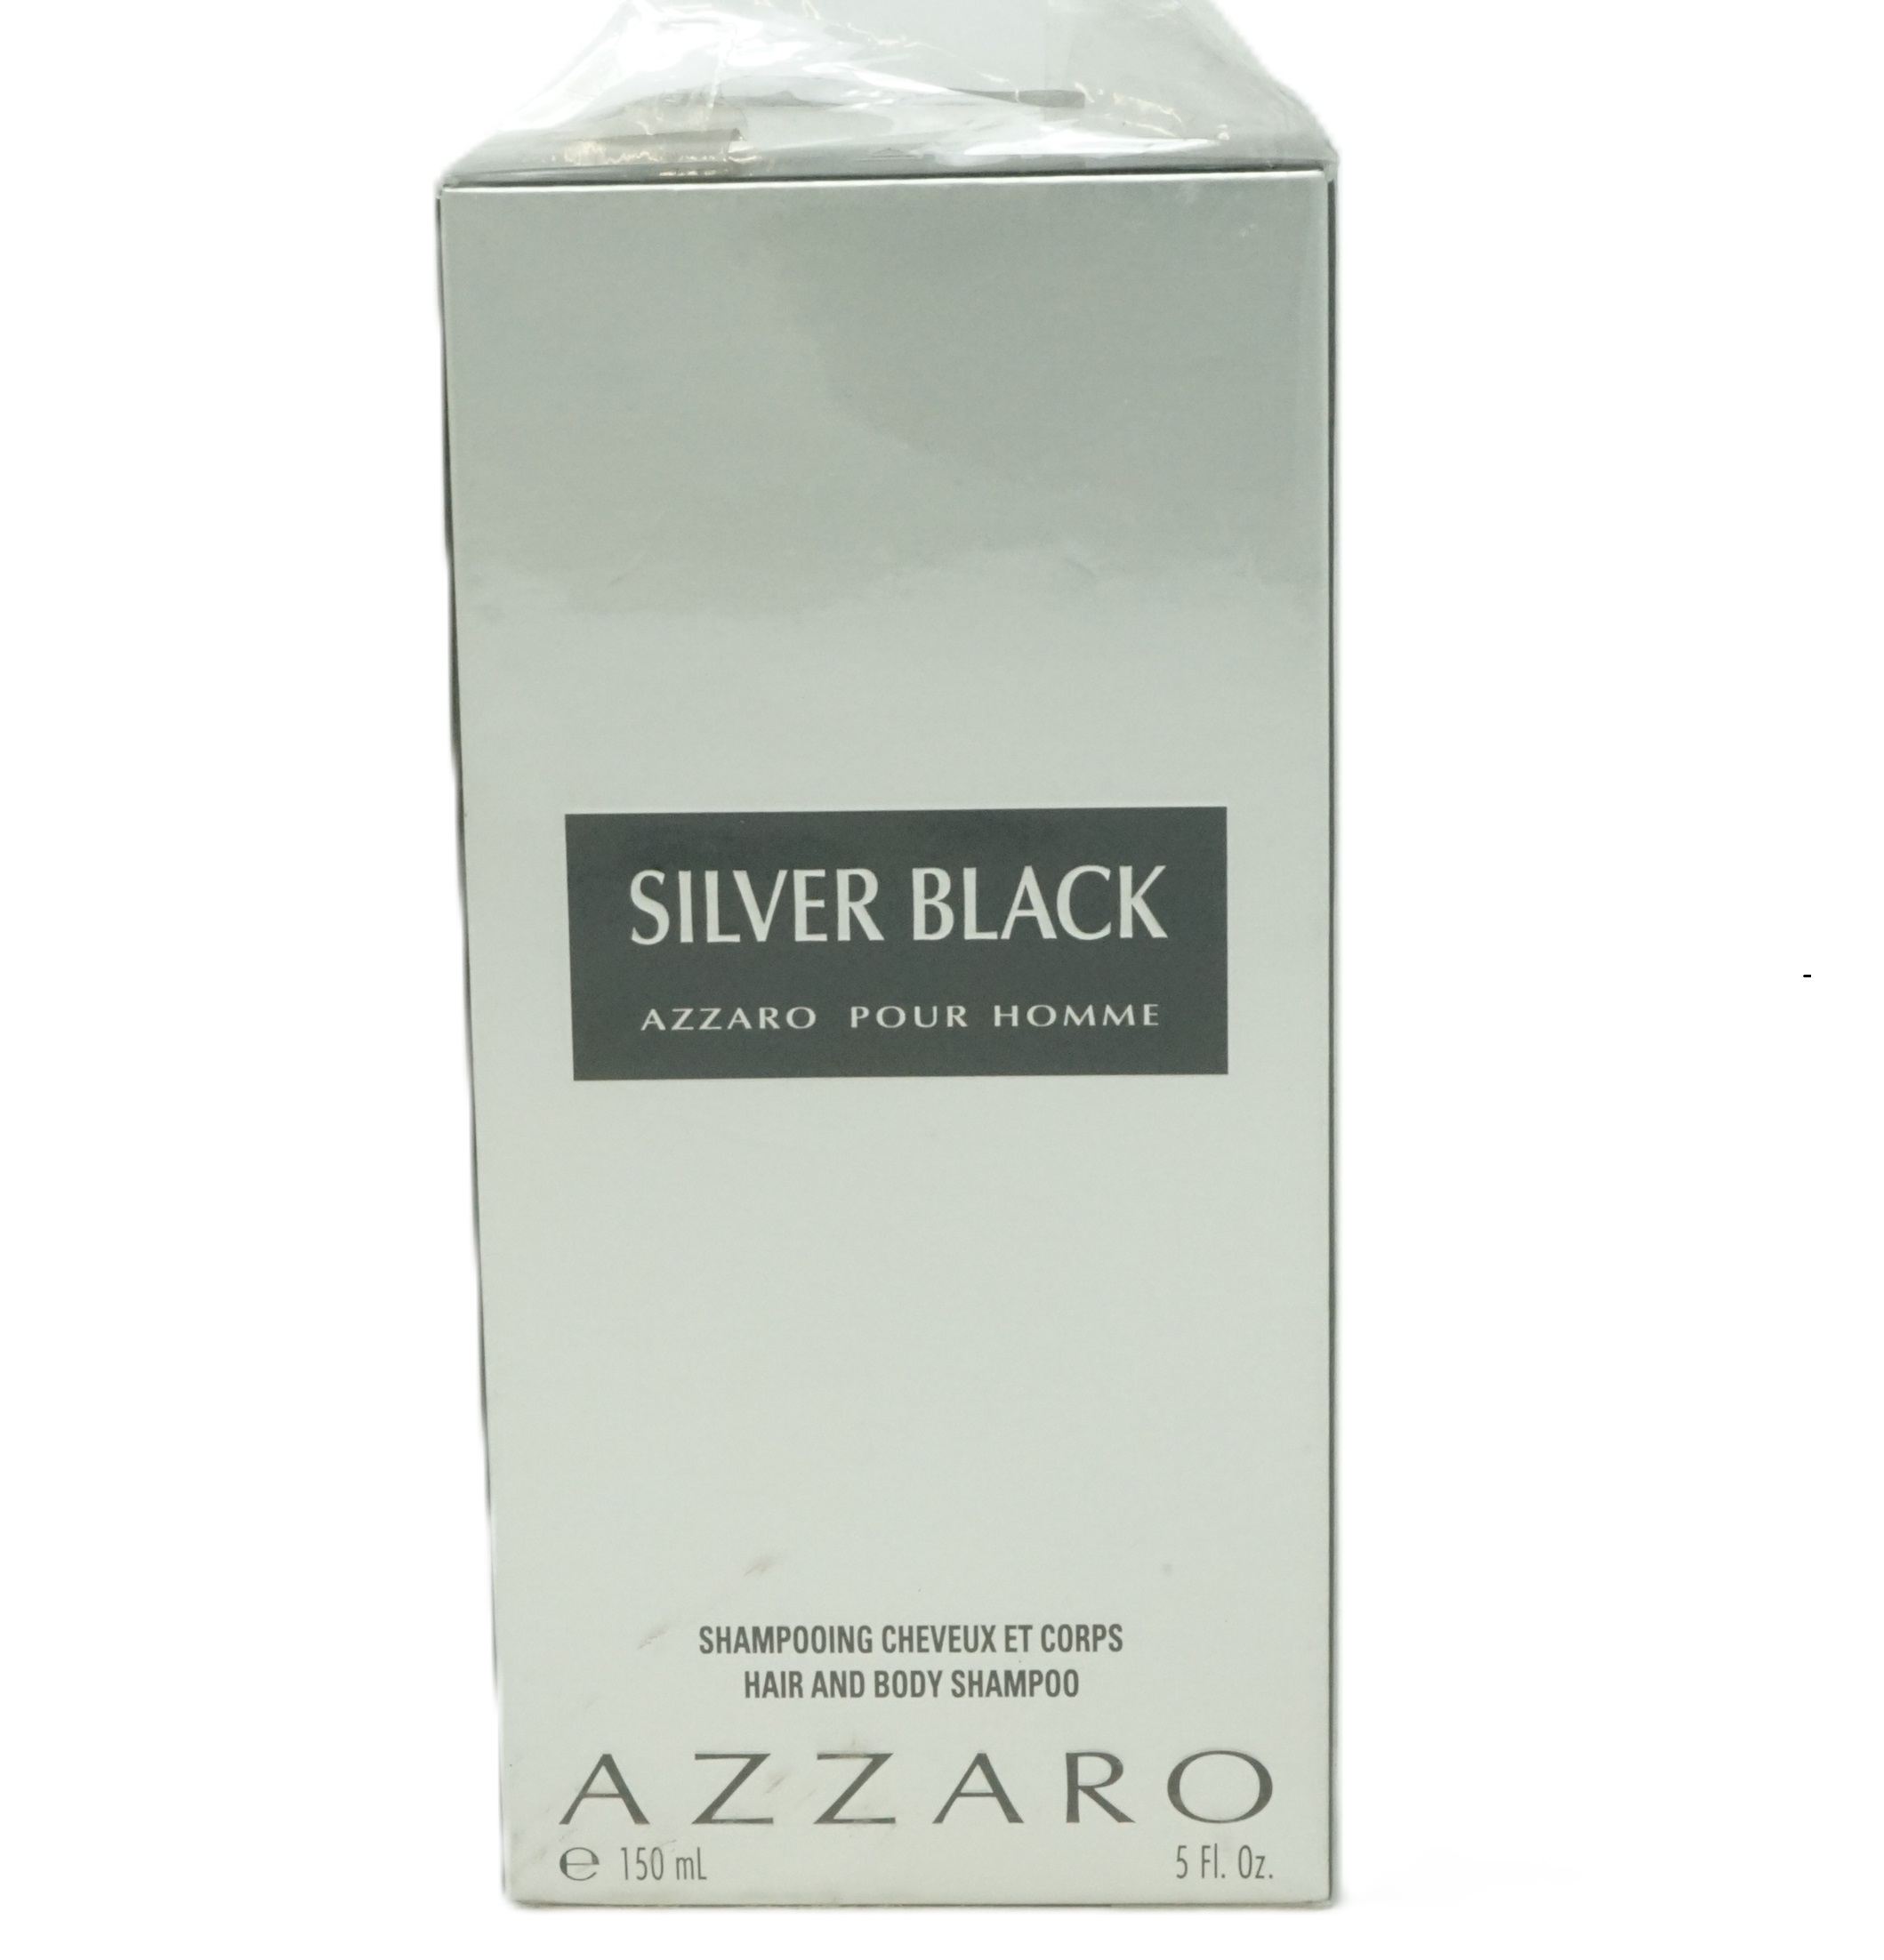 Azzaro Pour Homme Silver Black Hair and Body Shampoo 150 ml